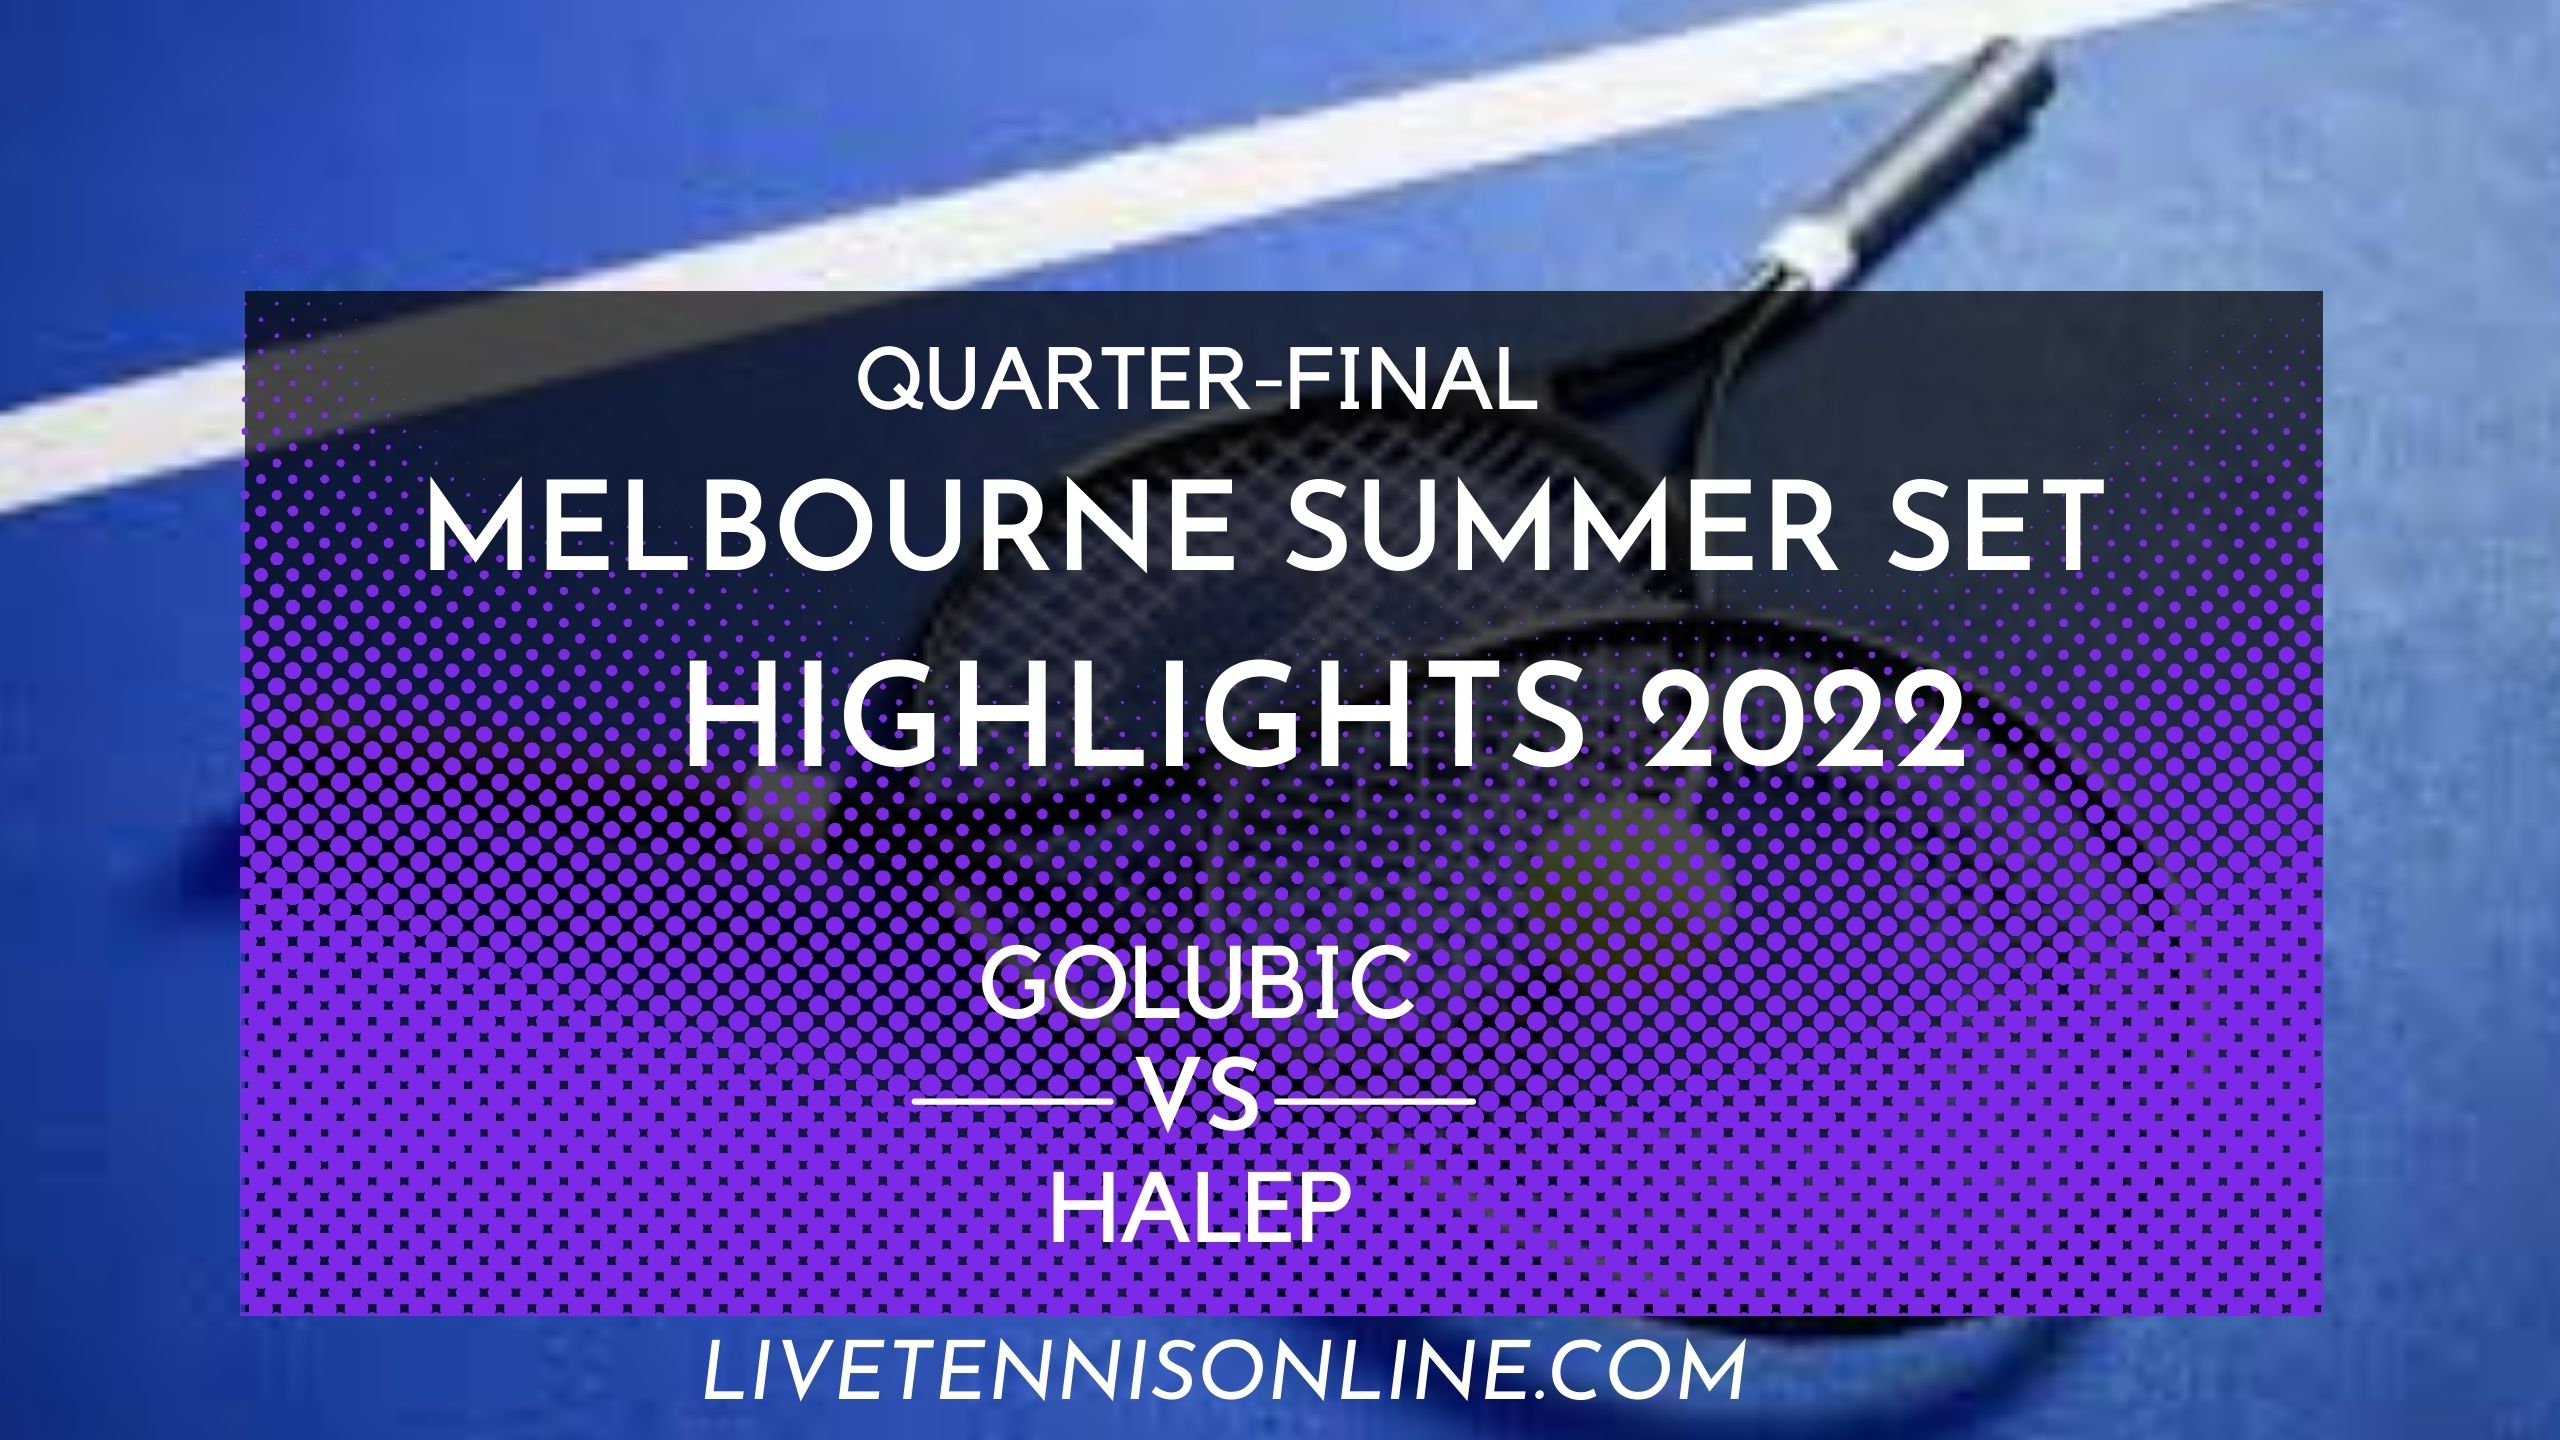 Golubic Vs Halep QF Highlights 2022 WTA Melbourne 1